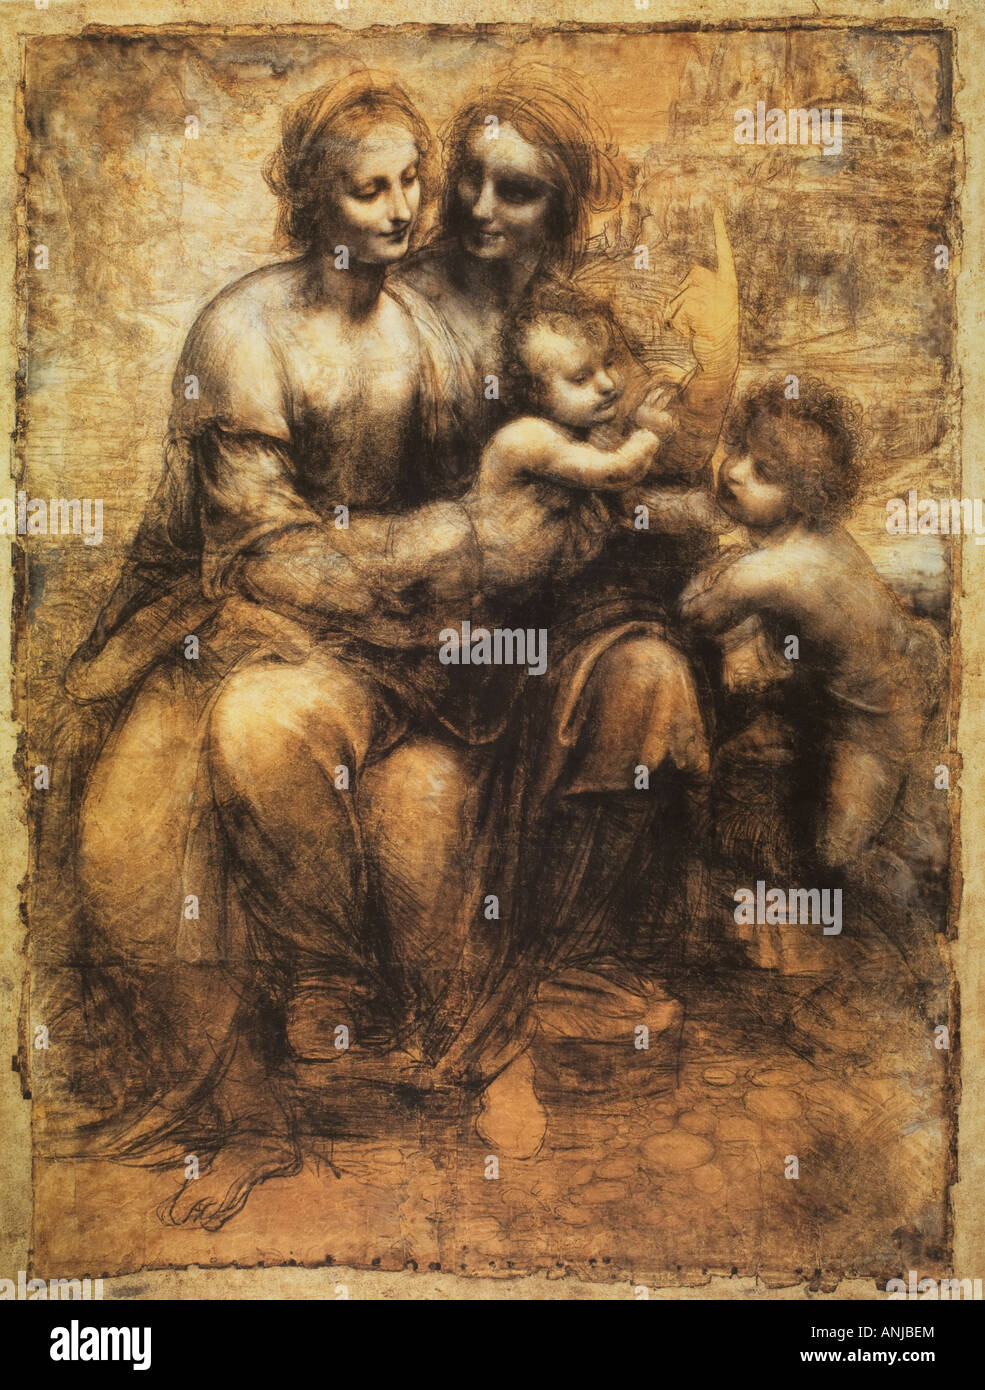 The Virgin and Child with St. Anne by Leonardo da Vinci Stock Photo